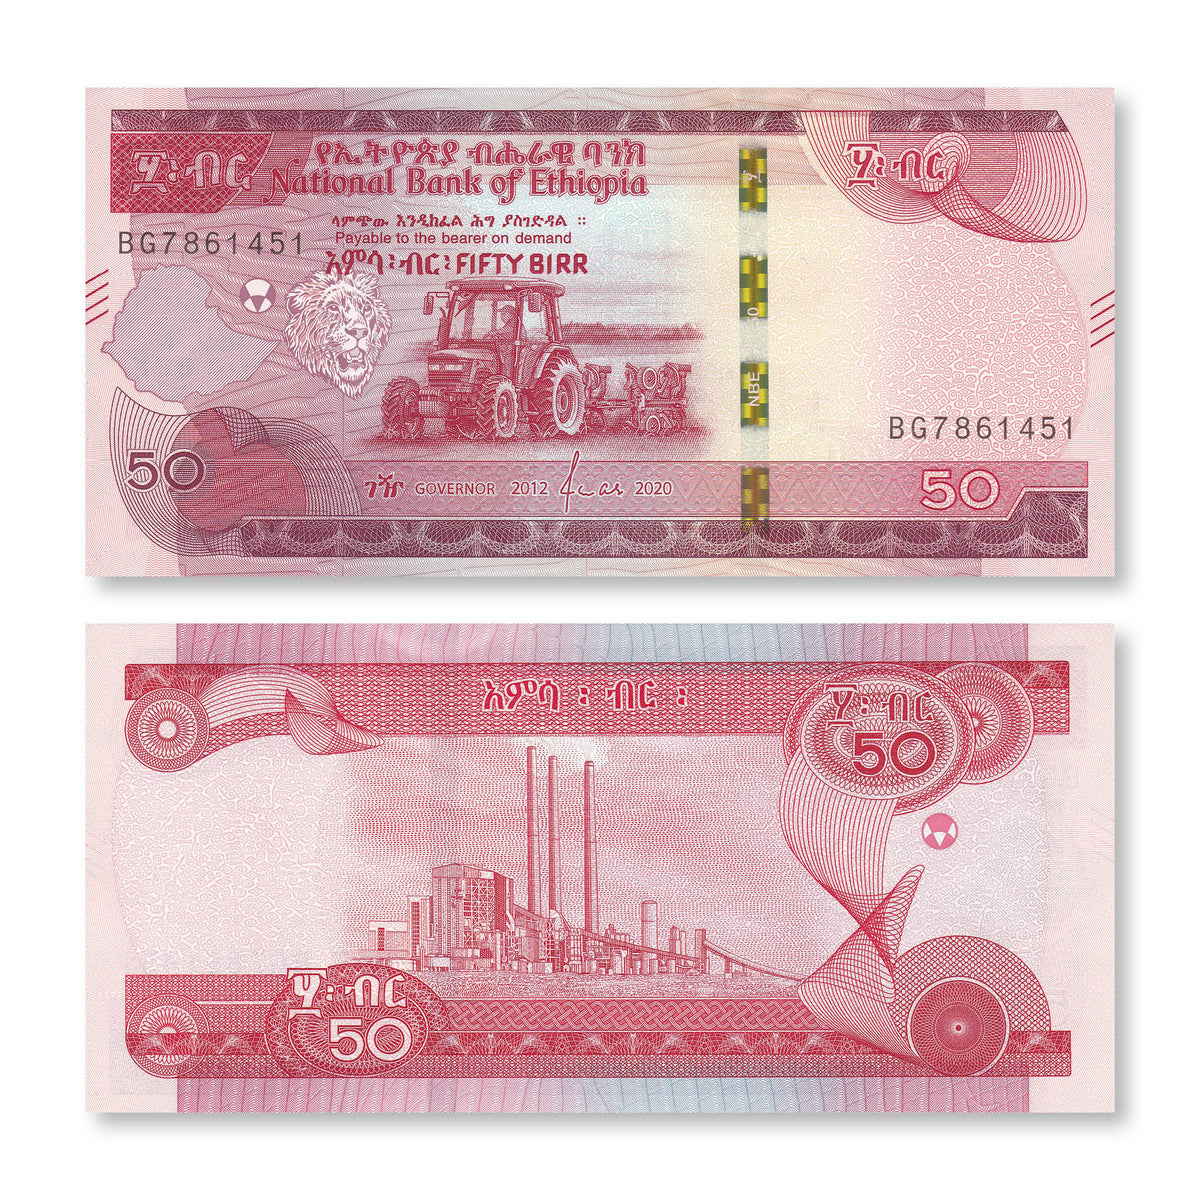 Ethiopia 50 Birr, 2012/2020, B336a, UNC - Robert's World Money - World Banknotes